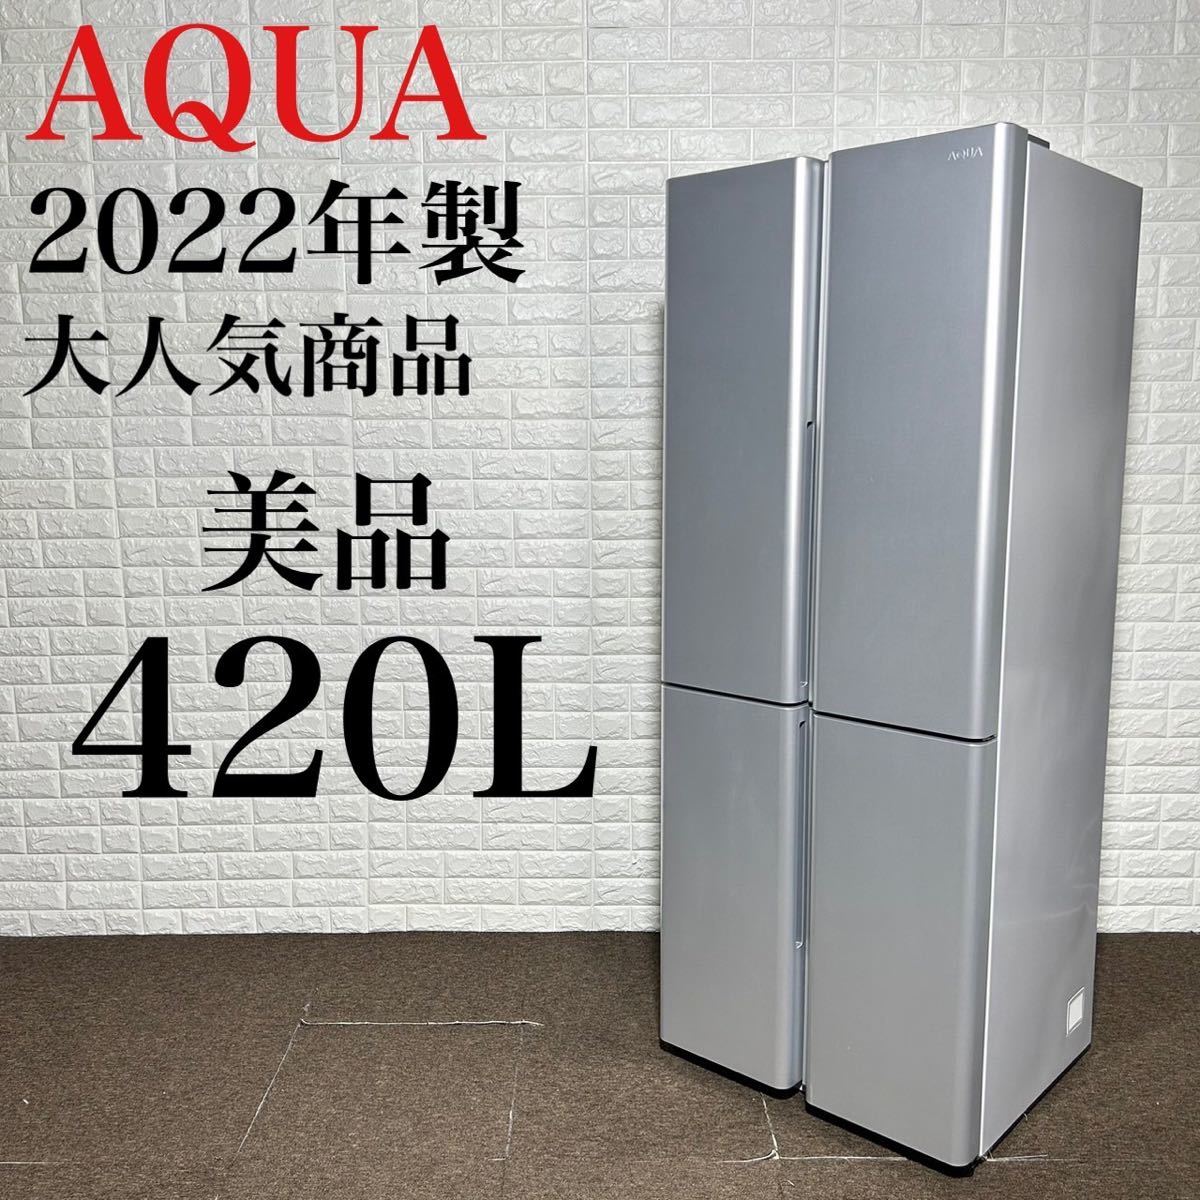 最新発見 AQR-TZ42M 冷蔵庫 AQUA 美品 2022年 k0335 大人気 大容量 400